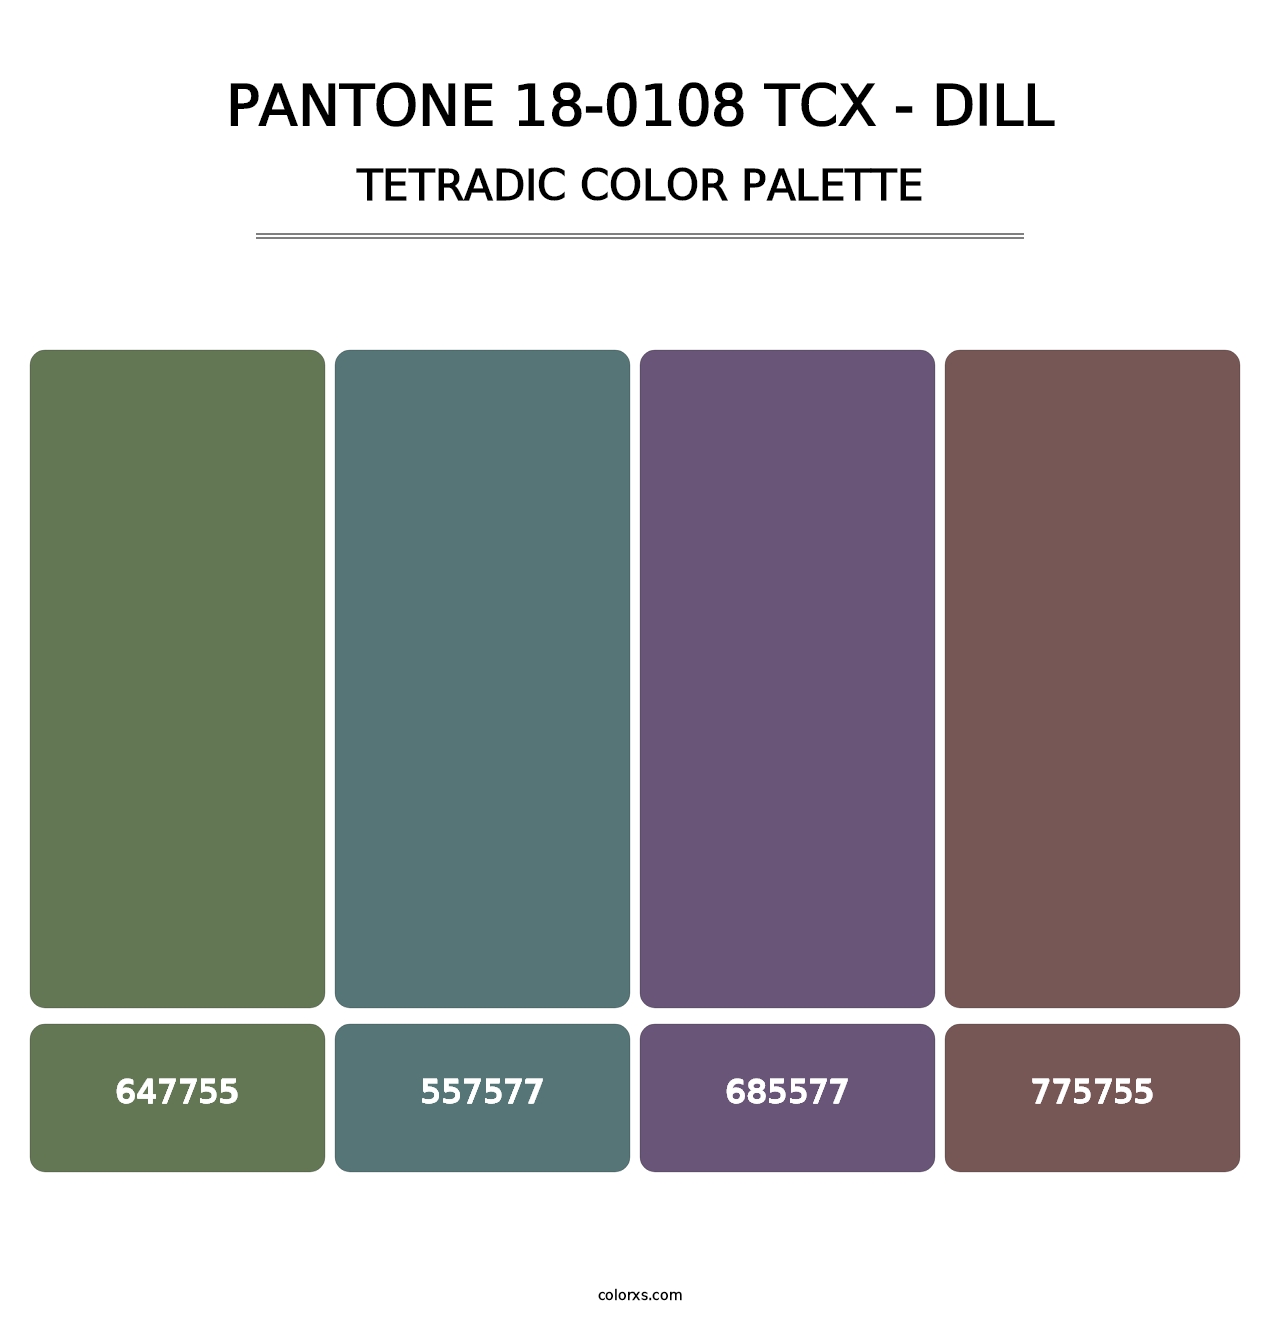 PANTONE 18-0108 TCX - Dill - Tetradic Color Palette